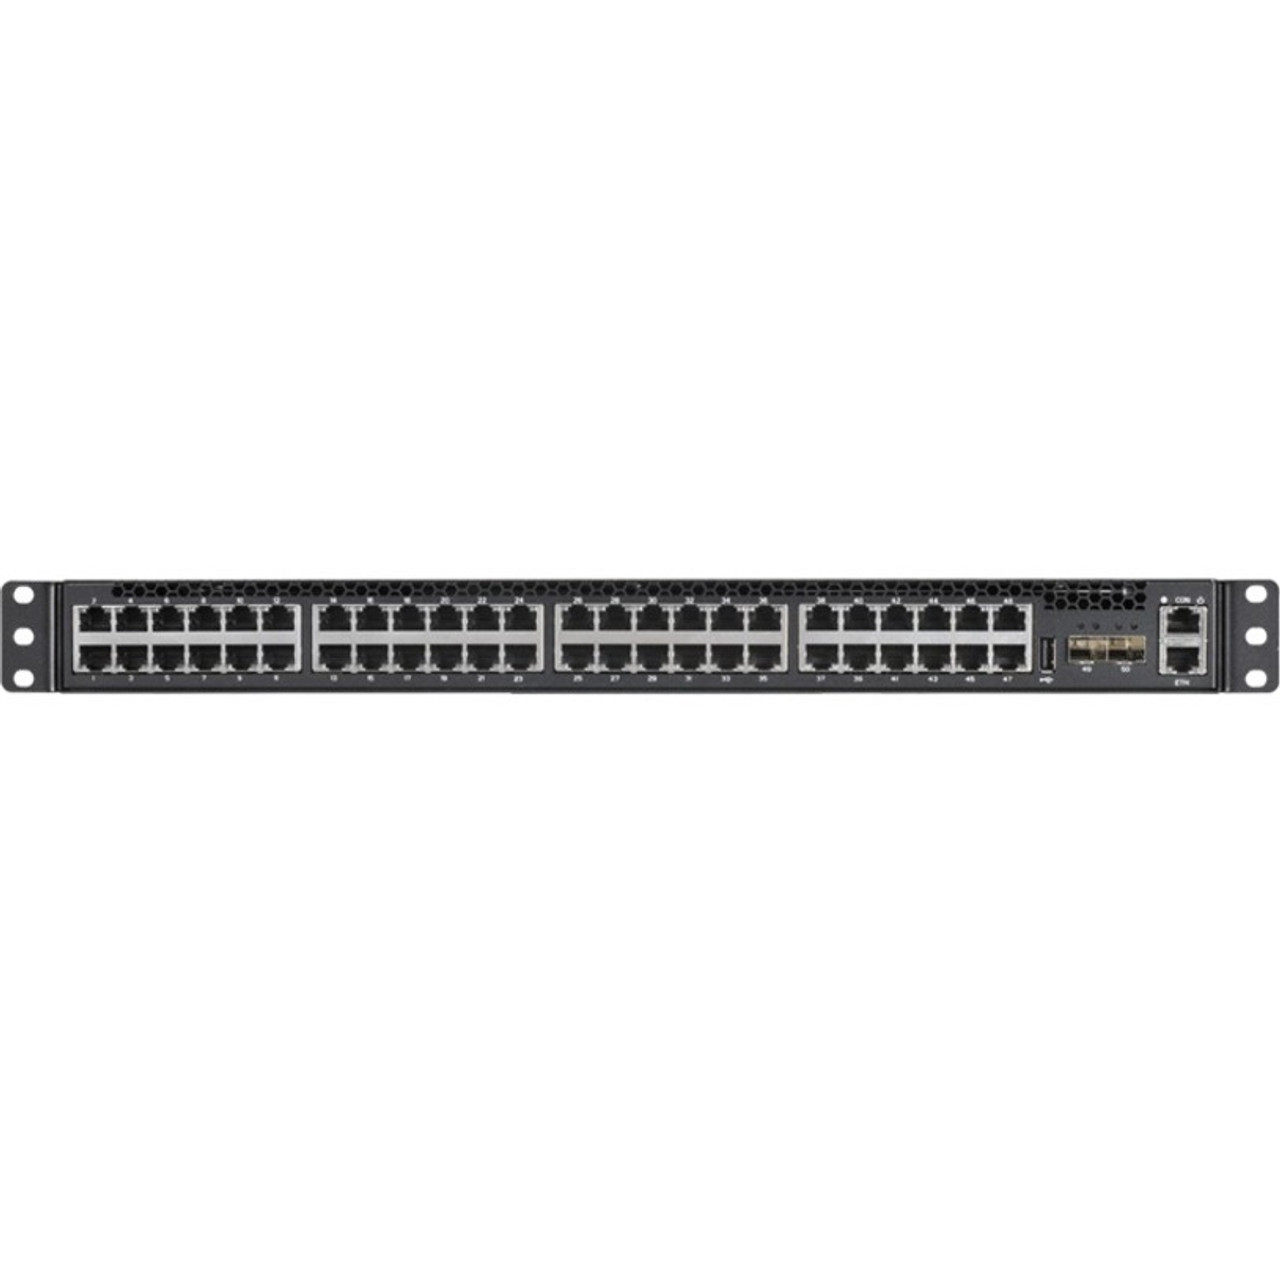 QCT 1G/10G Enterprise-Class Ethernet switch 1LY4AZZ000K